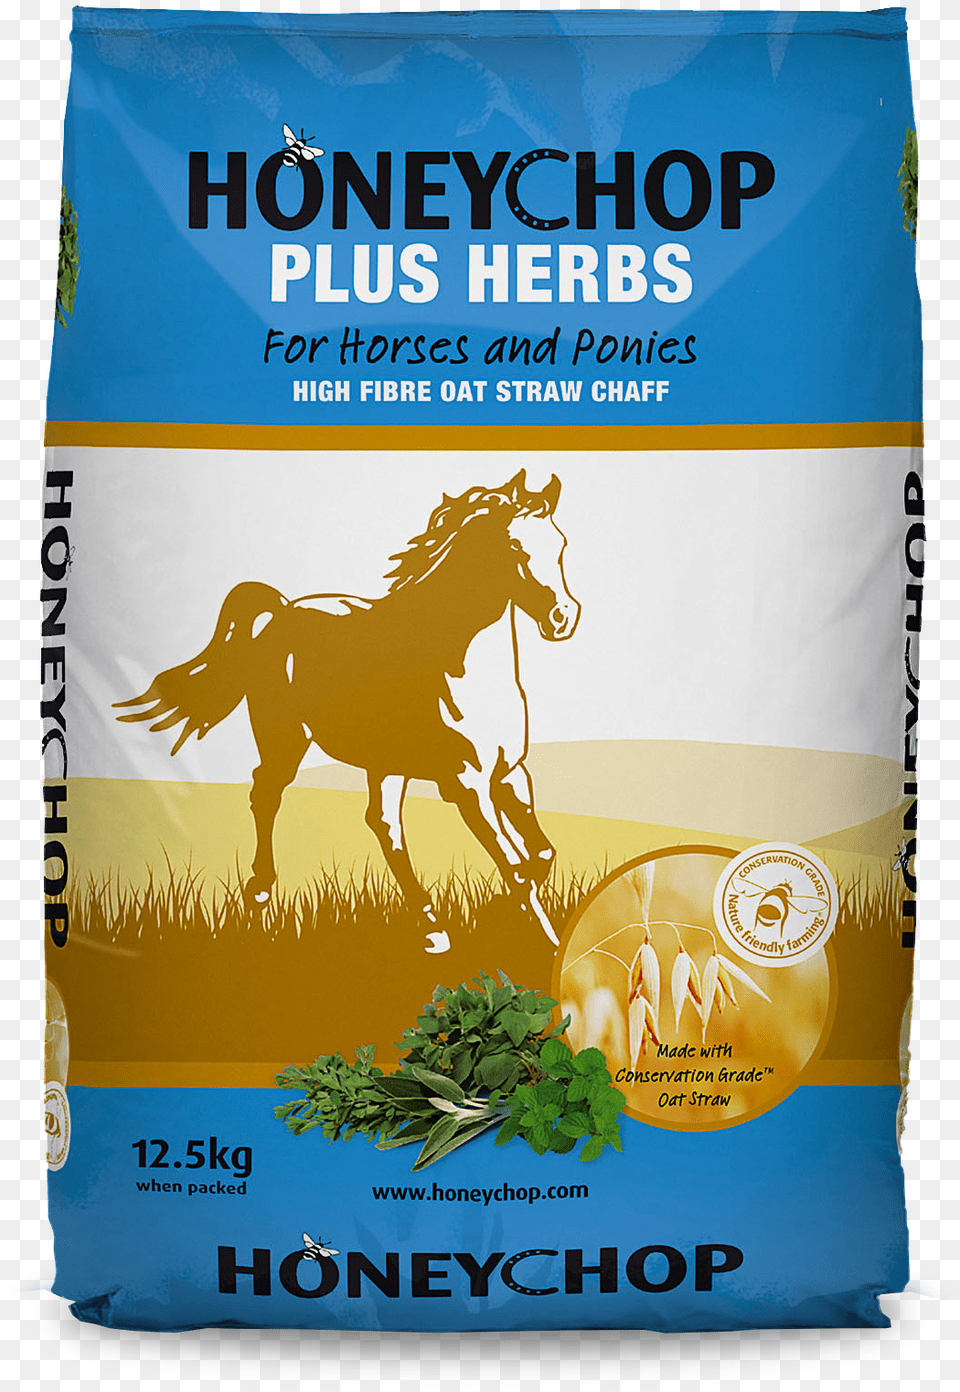 Honeychop Plus Herbs Bag Honeychop Original, Herbal, Plant, Advertisement, Poster Free Png Download